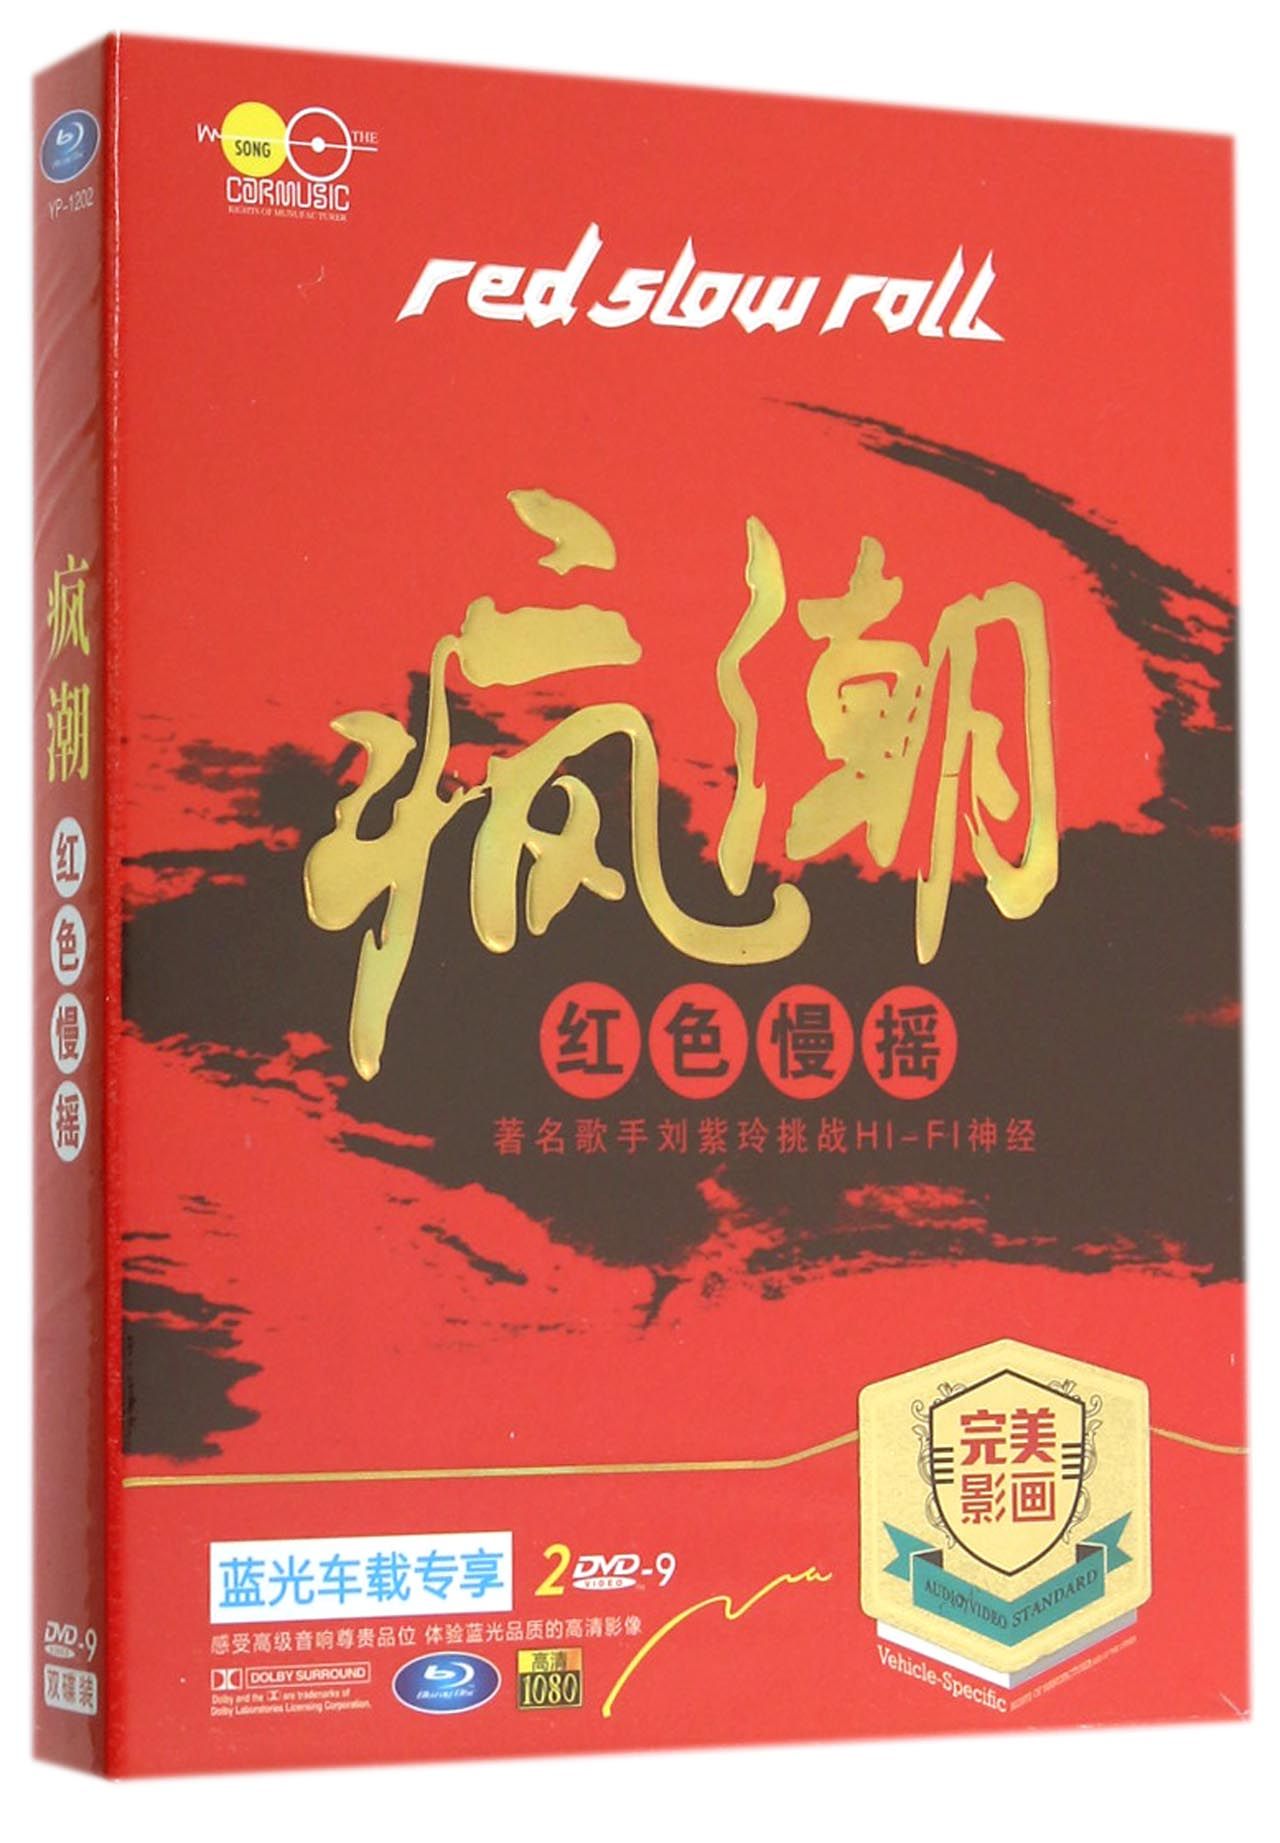 DVD-9疯潮红色慢摇(2碟装)